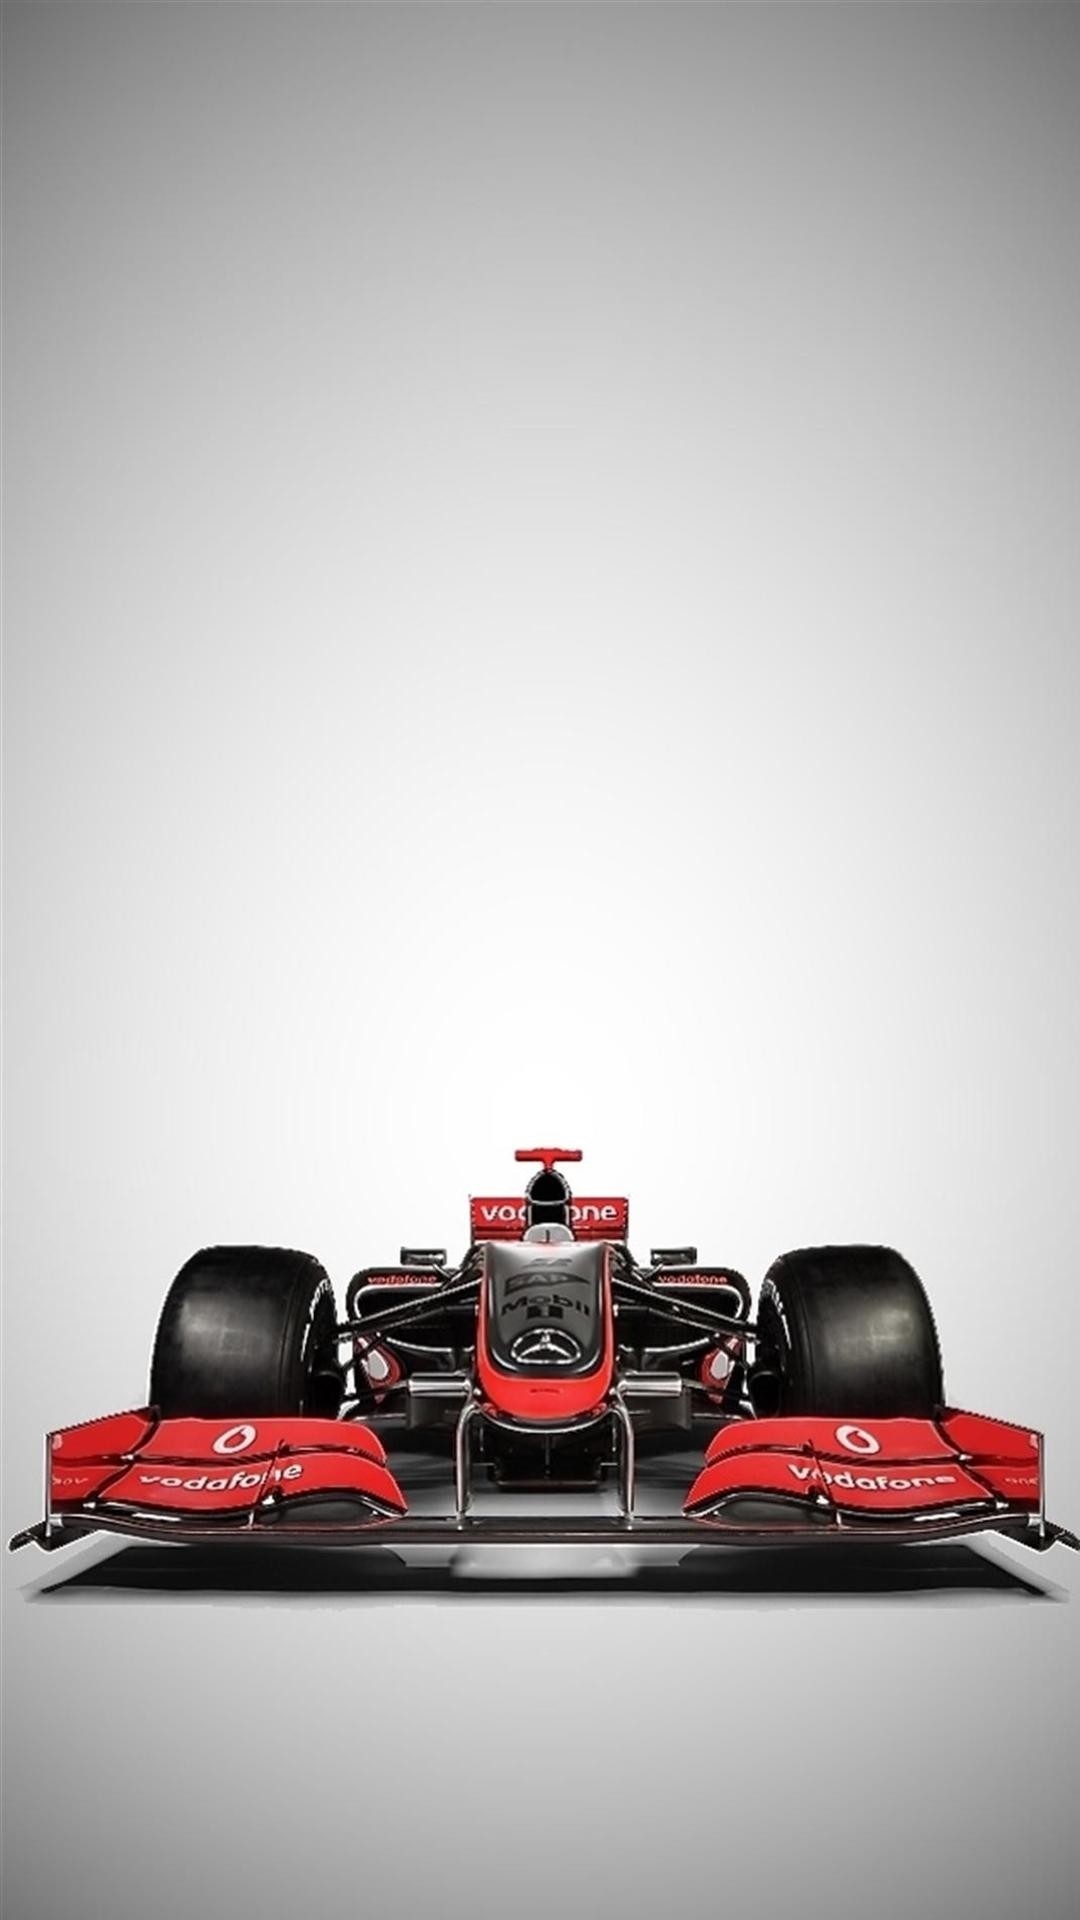 沃达丰Formula 1赛车